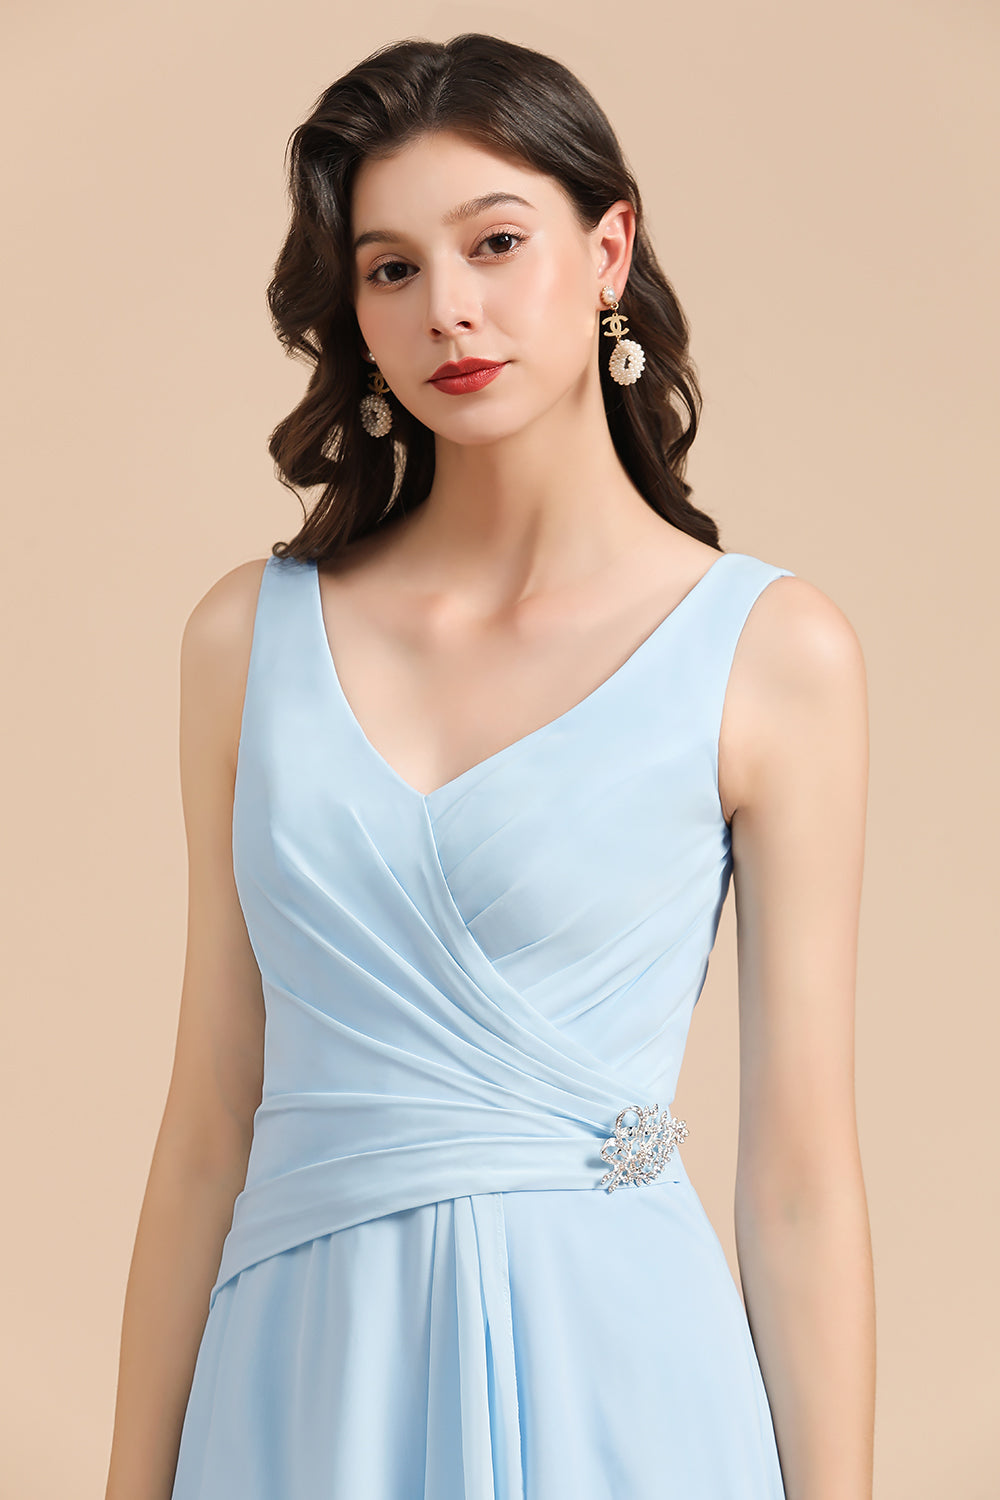 Sky Blue Chiffon Long Bridesmaid Dress Ruched-27dress